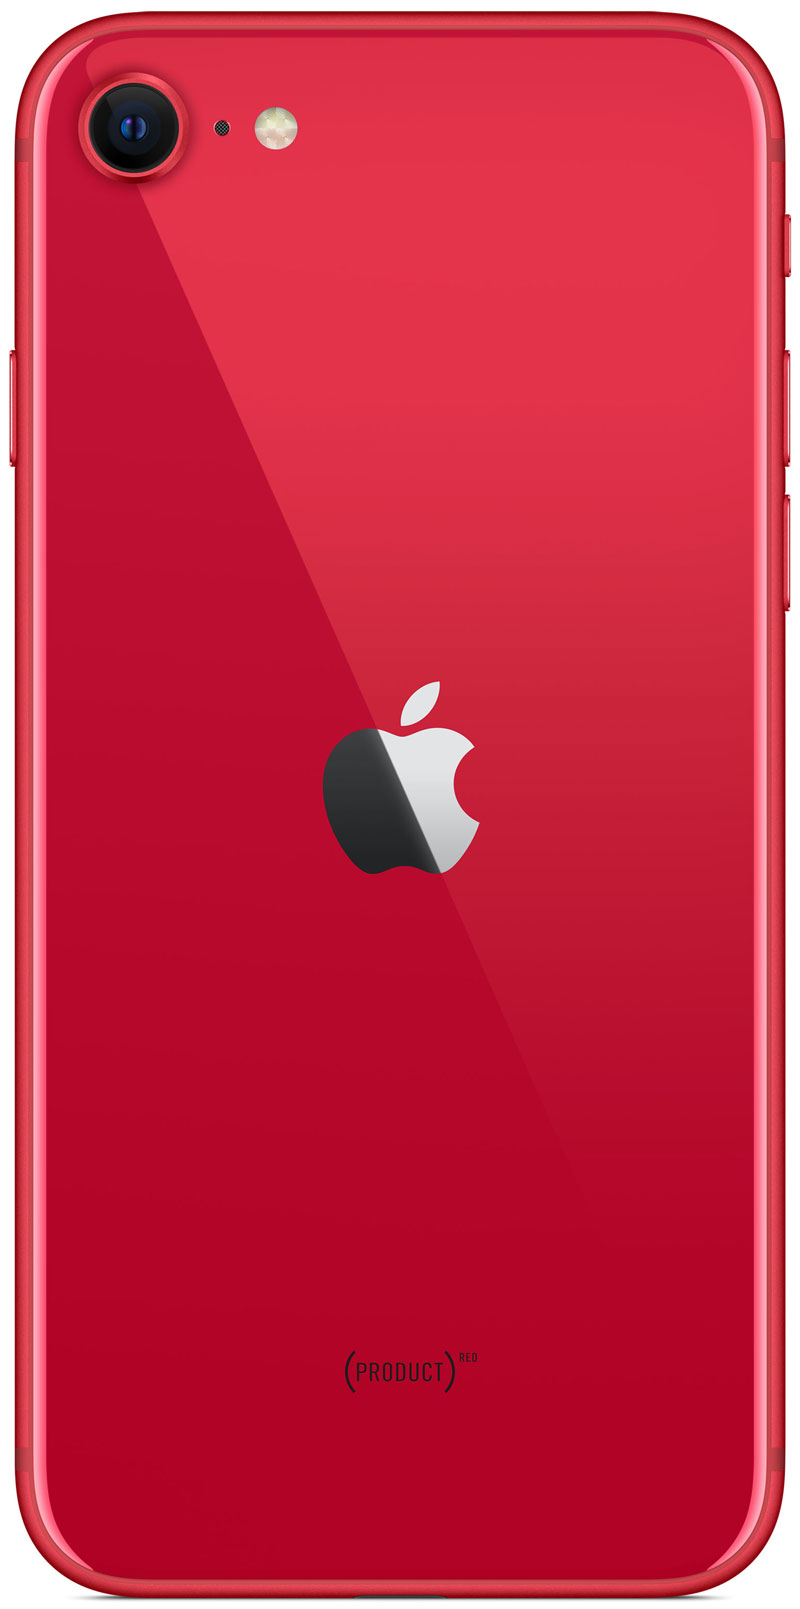 Apple iPhone SE 2020 rouge 64Go